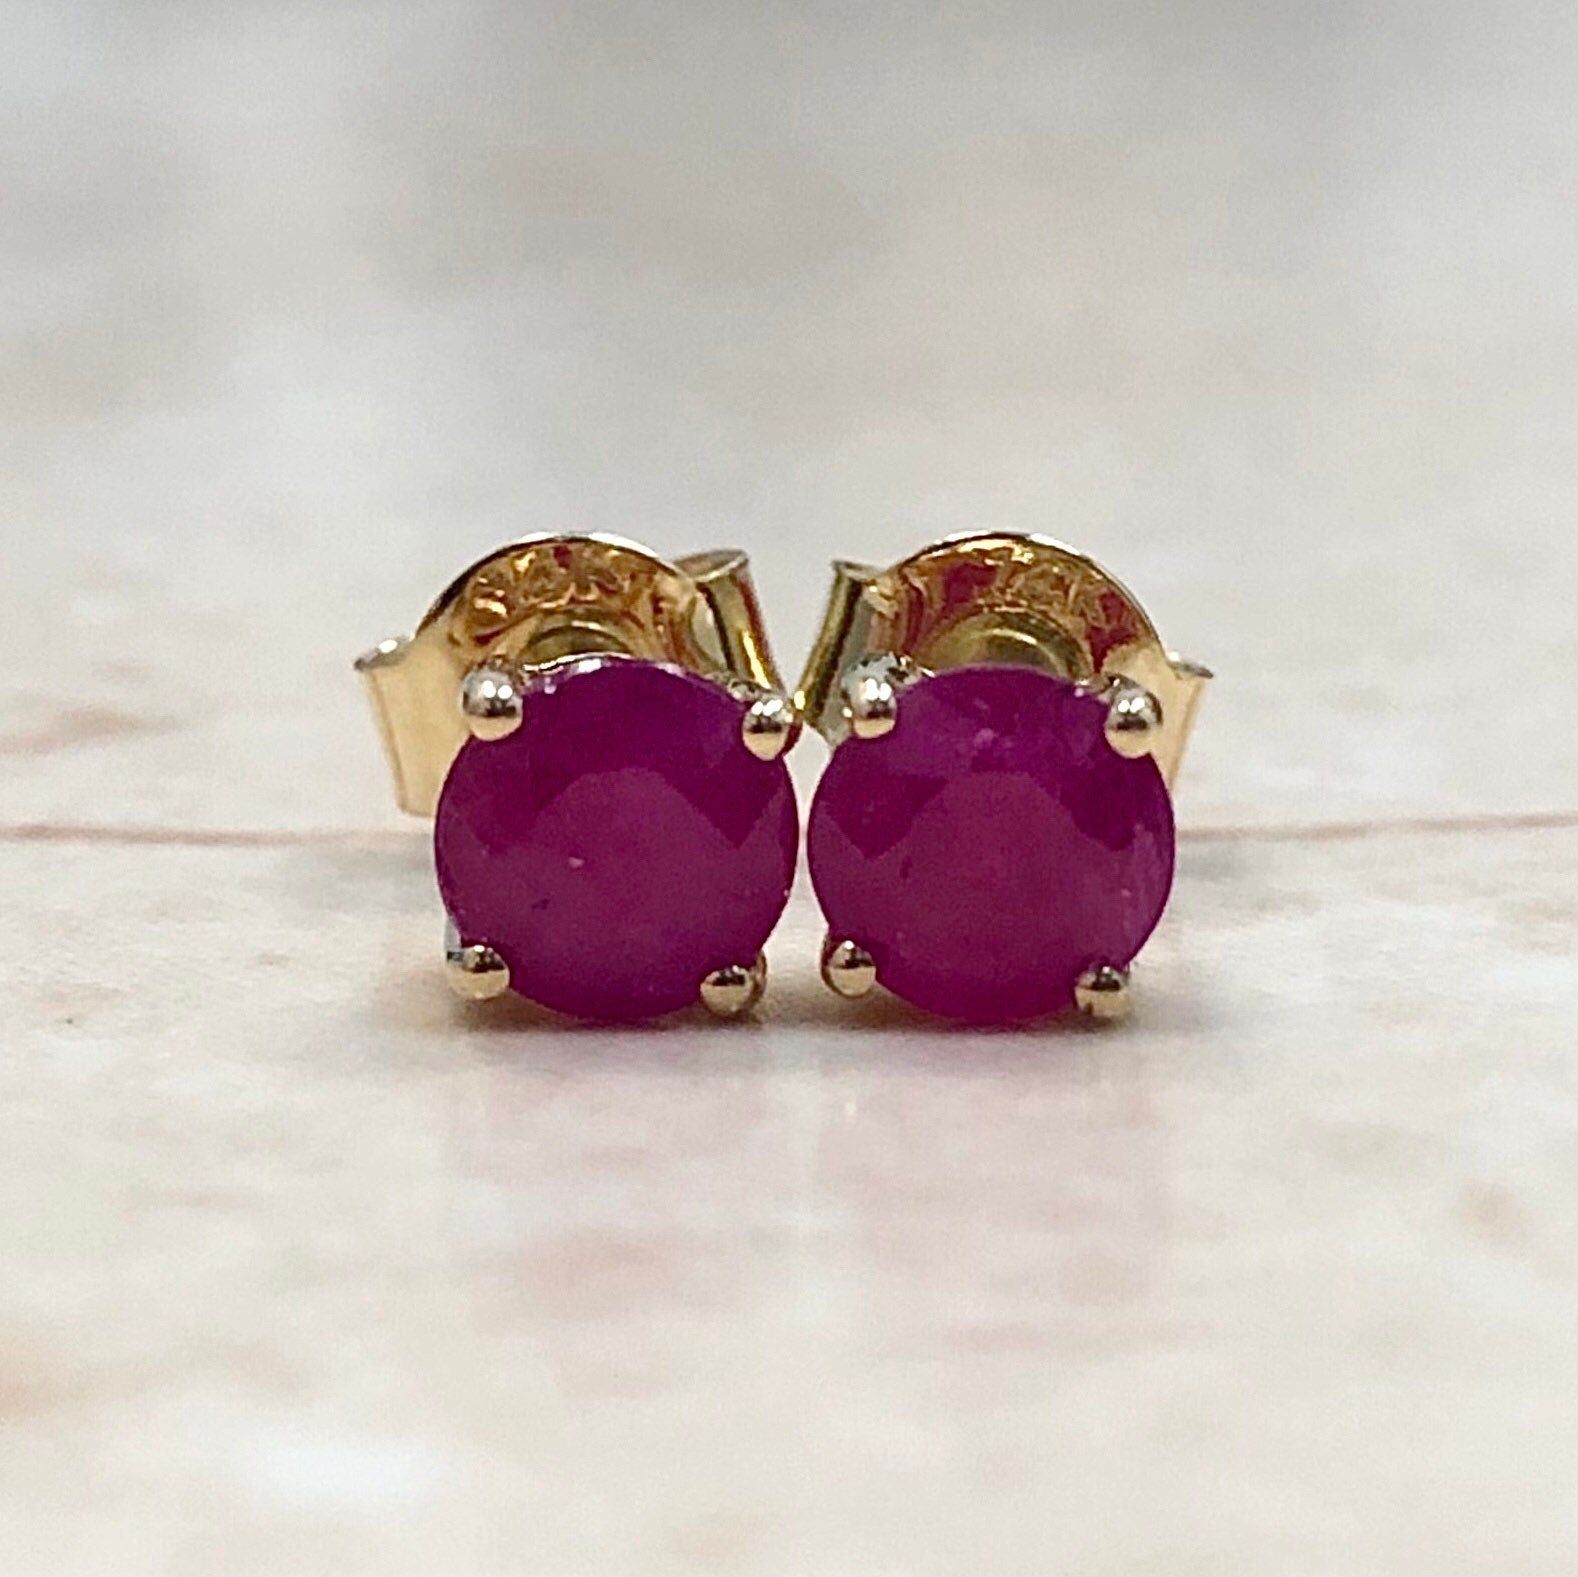 Natural Ruby Stud Earrings - July Birthstone - 14 Karat Yellow Gold - Genuine Gemstone - Push Backs - Birthday Gift